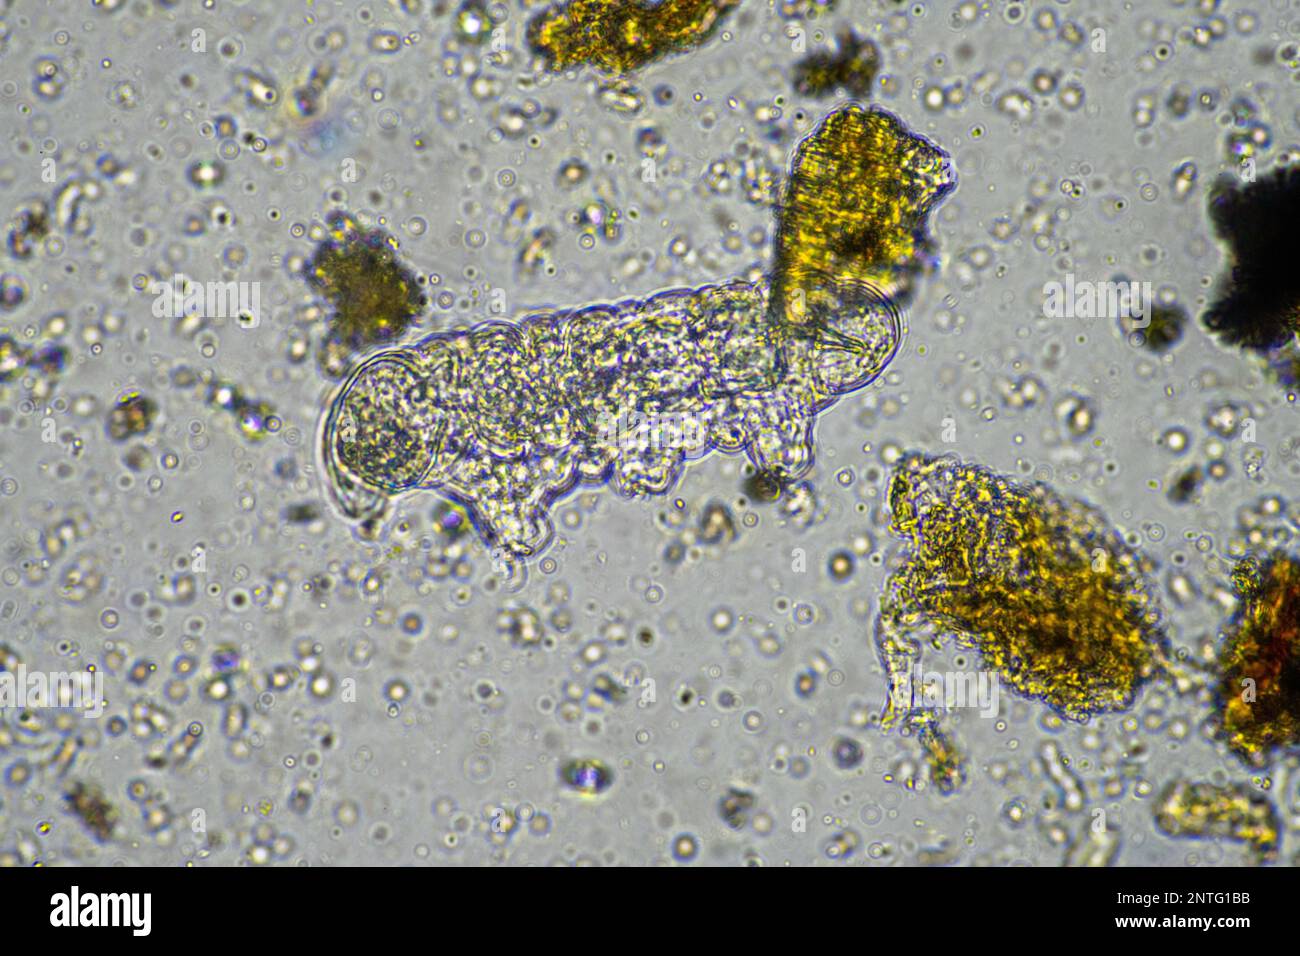 soil microorganisms including nematode, microarthropods, micro arthropod, tardigrade, and rotifers a soil sample, soil fungus and bacteria on a regene Stock Photo